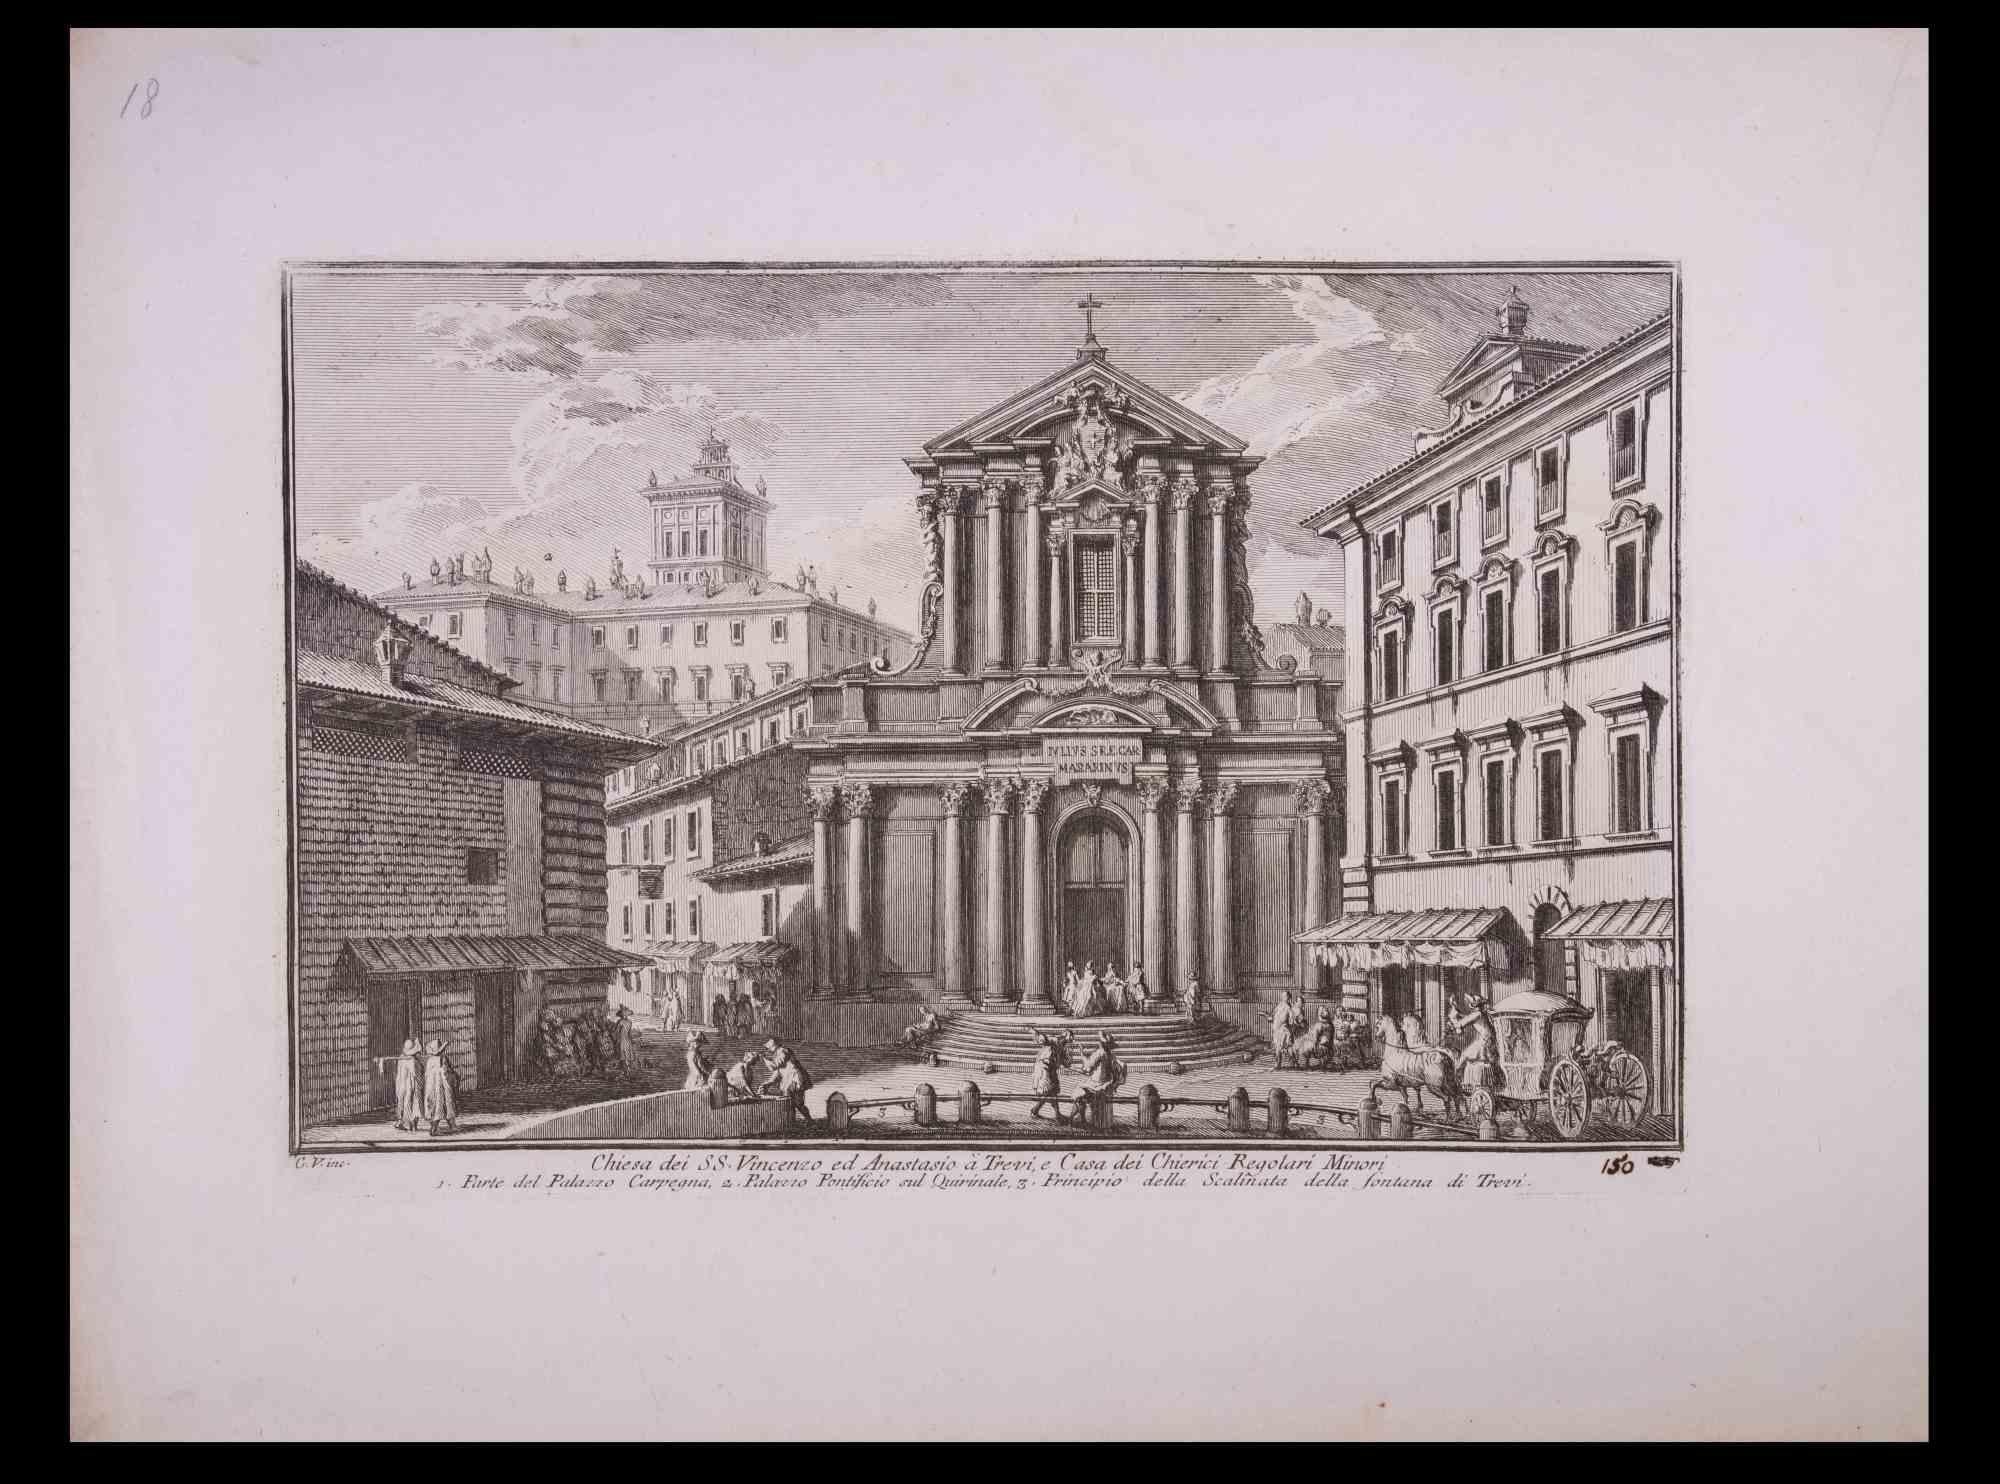  Chiesa dei SS. Vincenzo ed Anastasio - Etching by G. Vasi - Late 18th Century